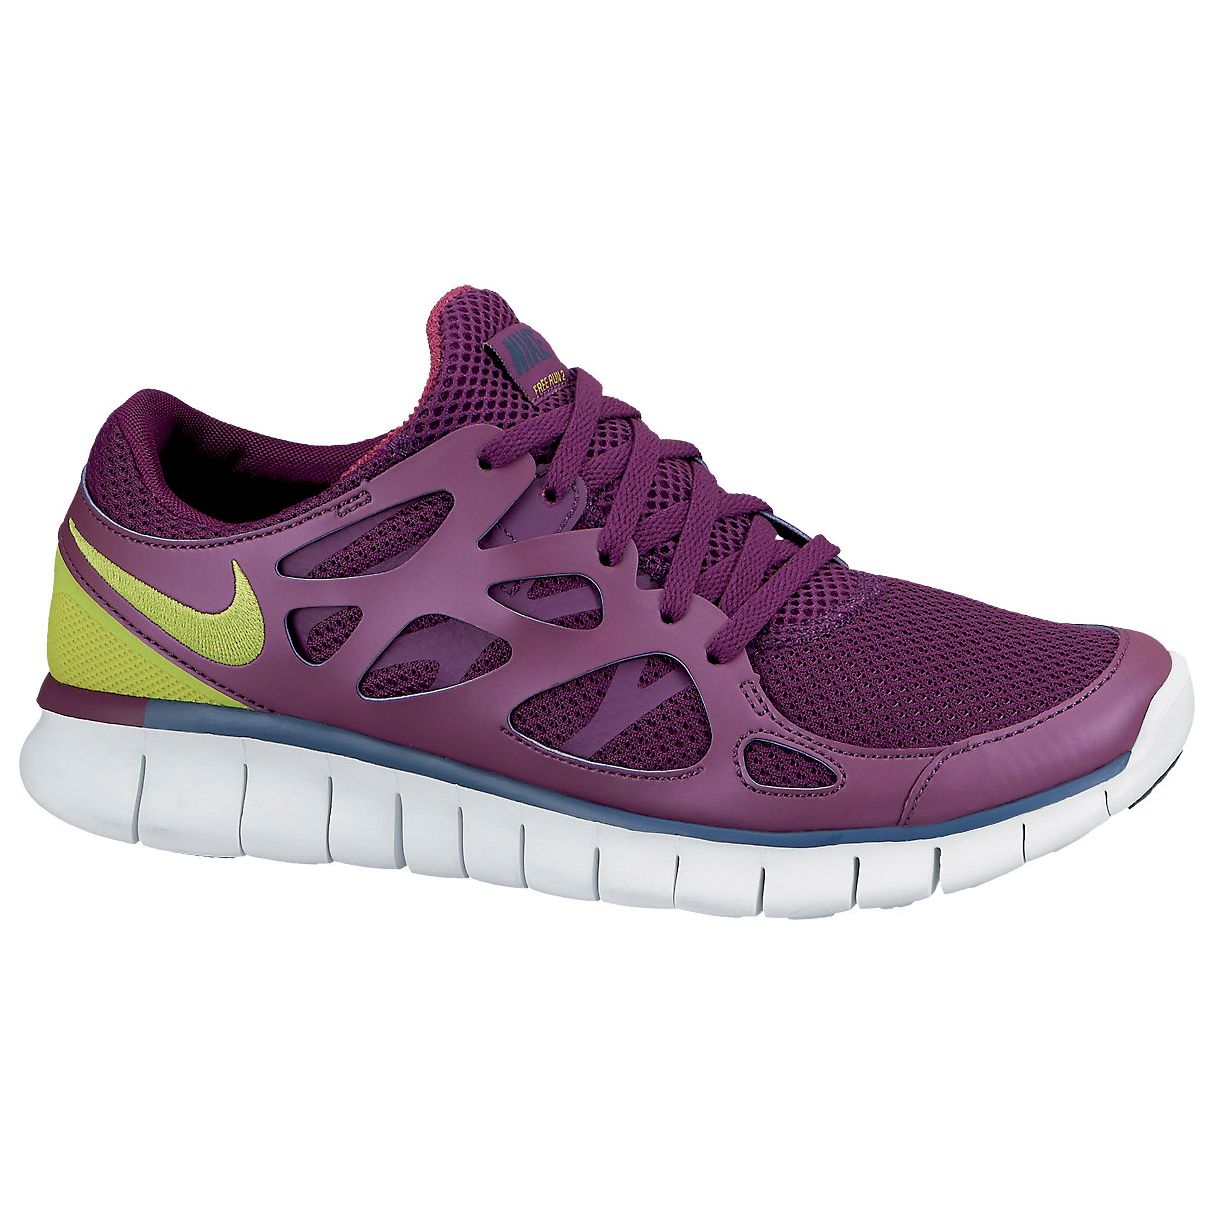 Nike Free Run 2 Women's Running Shoes, Purple